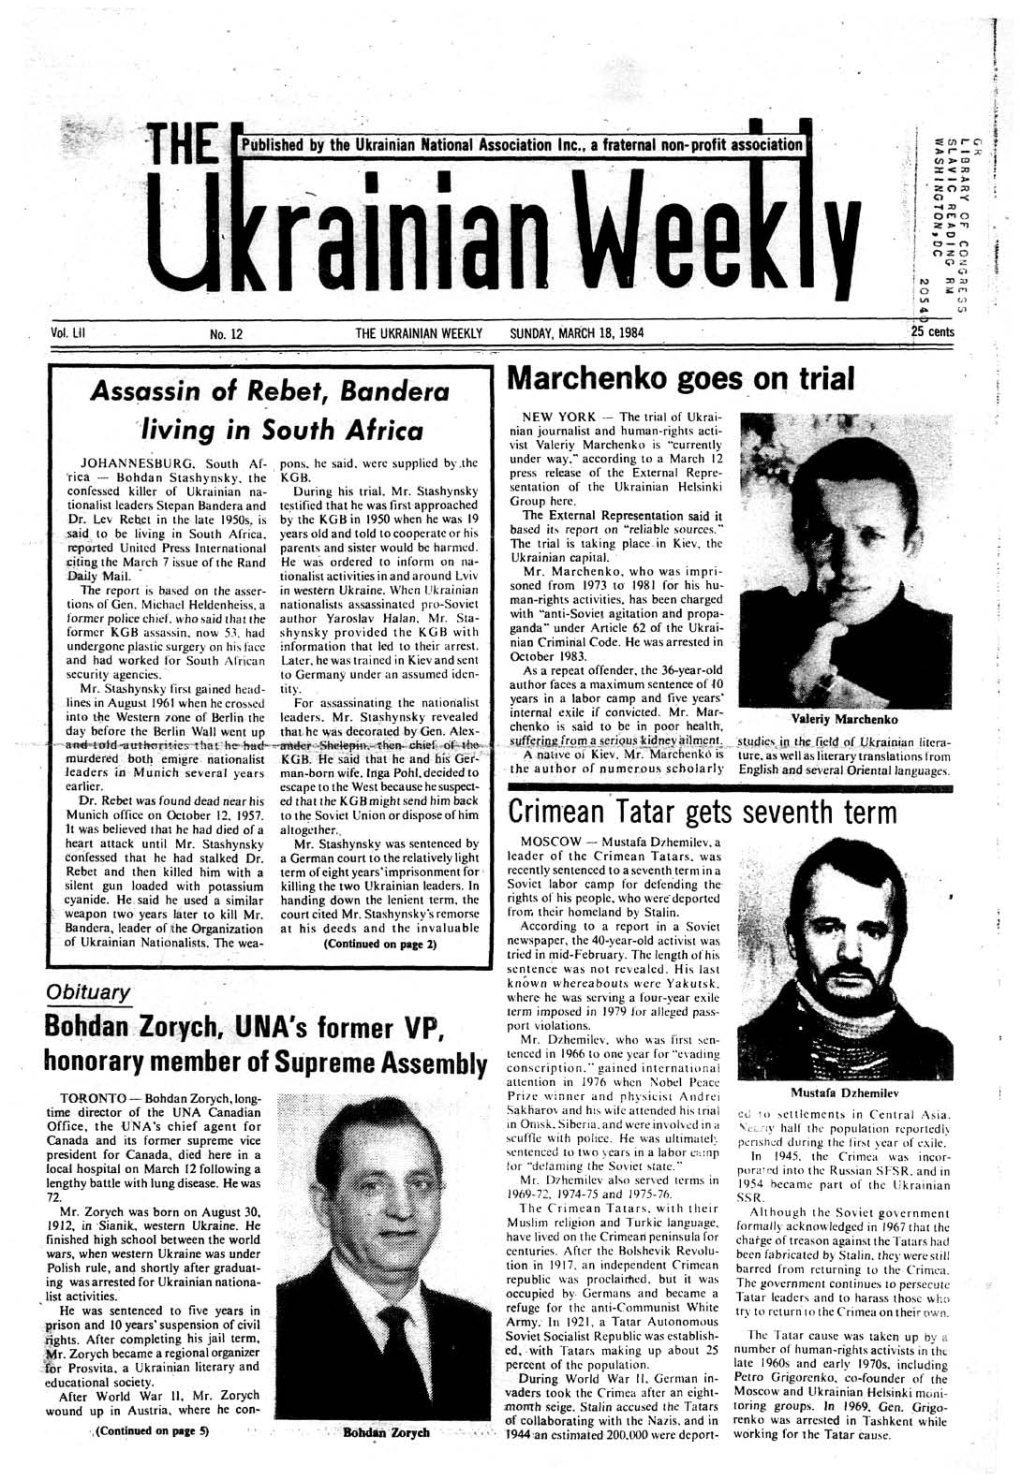 The Ukrainian Weekly 1984, No.12